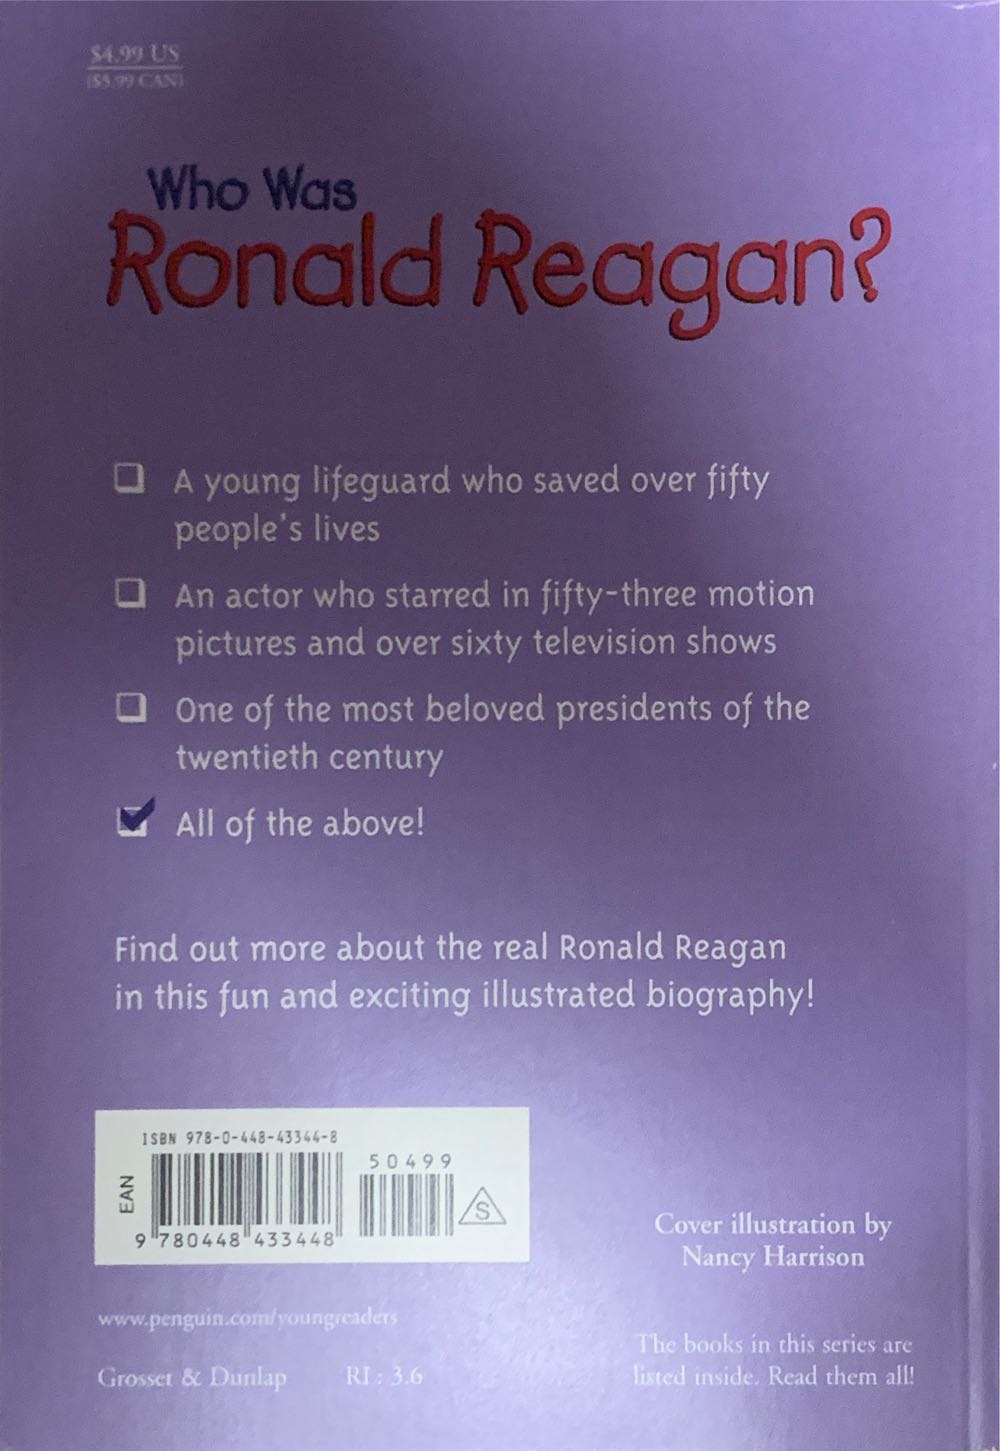 Who Was Ronald Reagan? - Elizabeth Wolf (Hubsta Ltd - Paperback) book collectible [Barcode 9780448433448] - Main Image 2